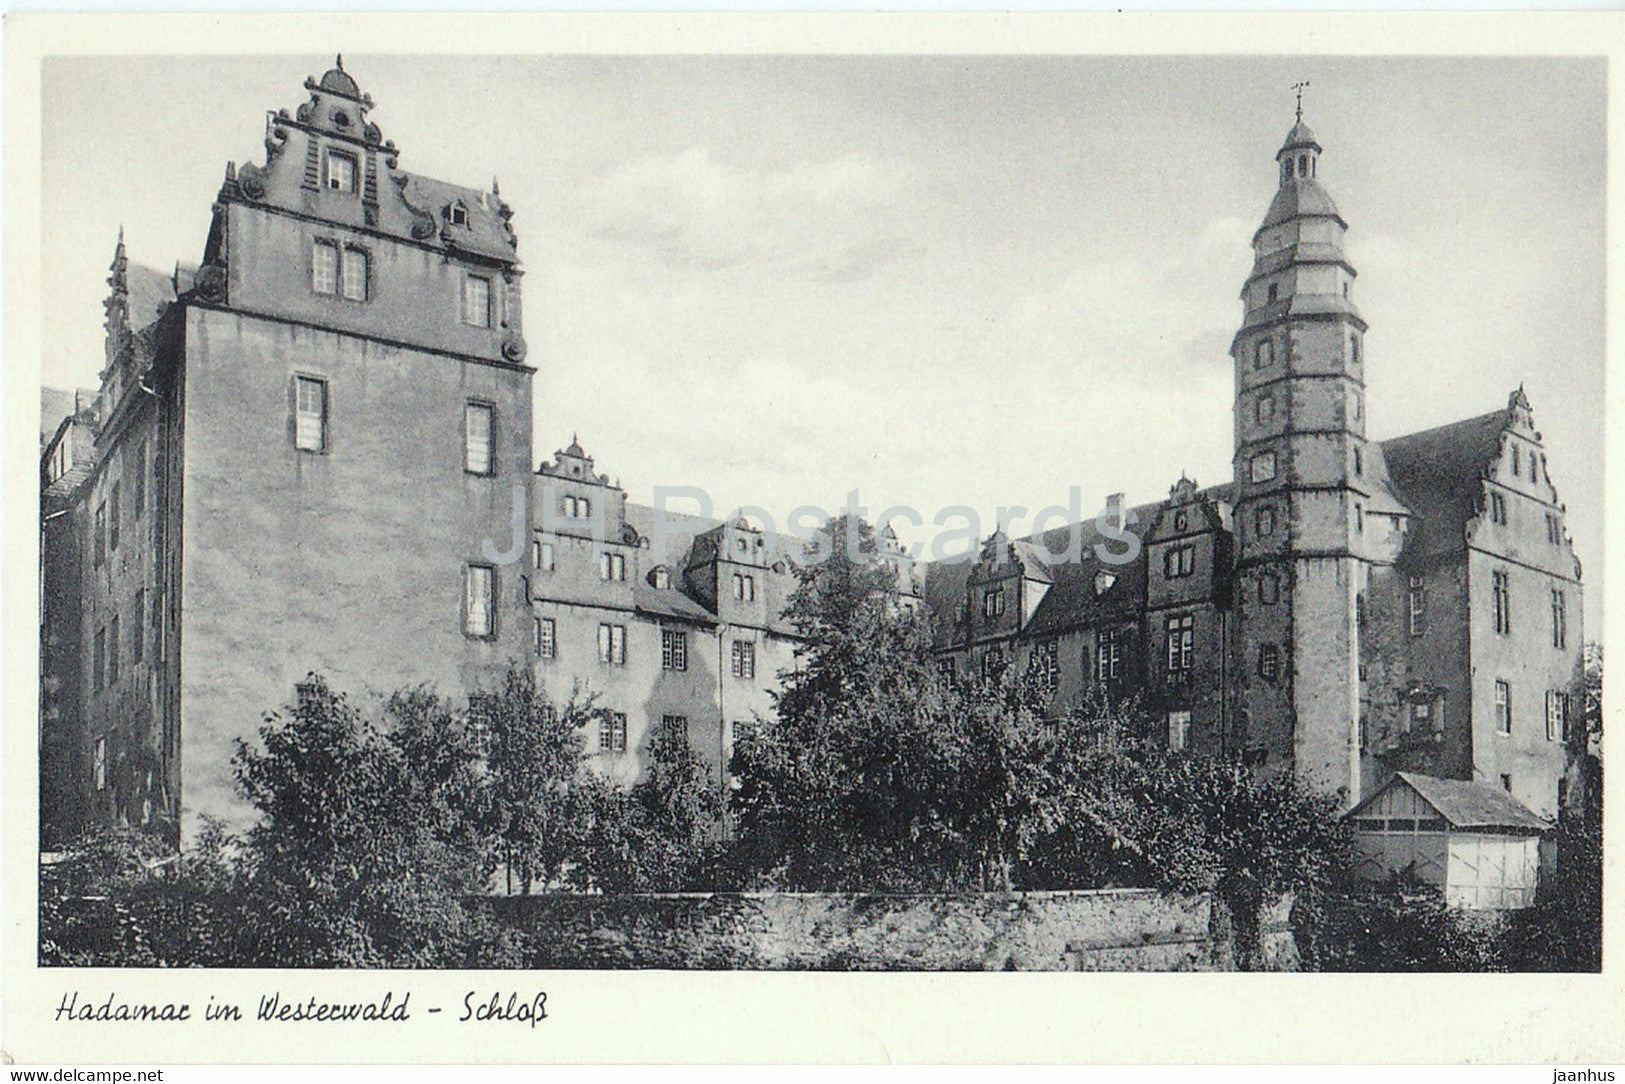 Hadamar im Westerwald - Schloss - castle - Germany - unused - JH Postcards